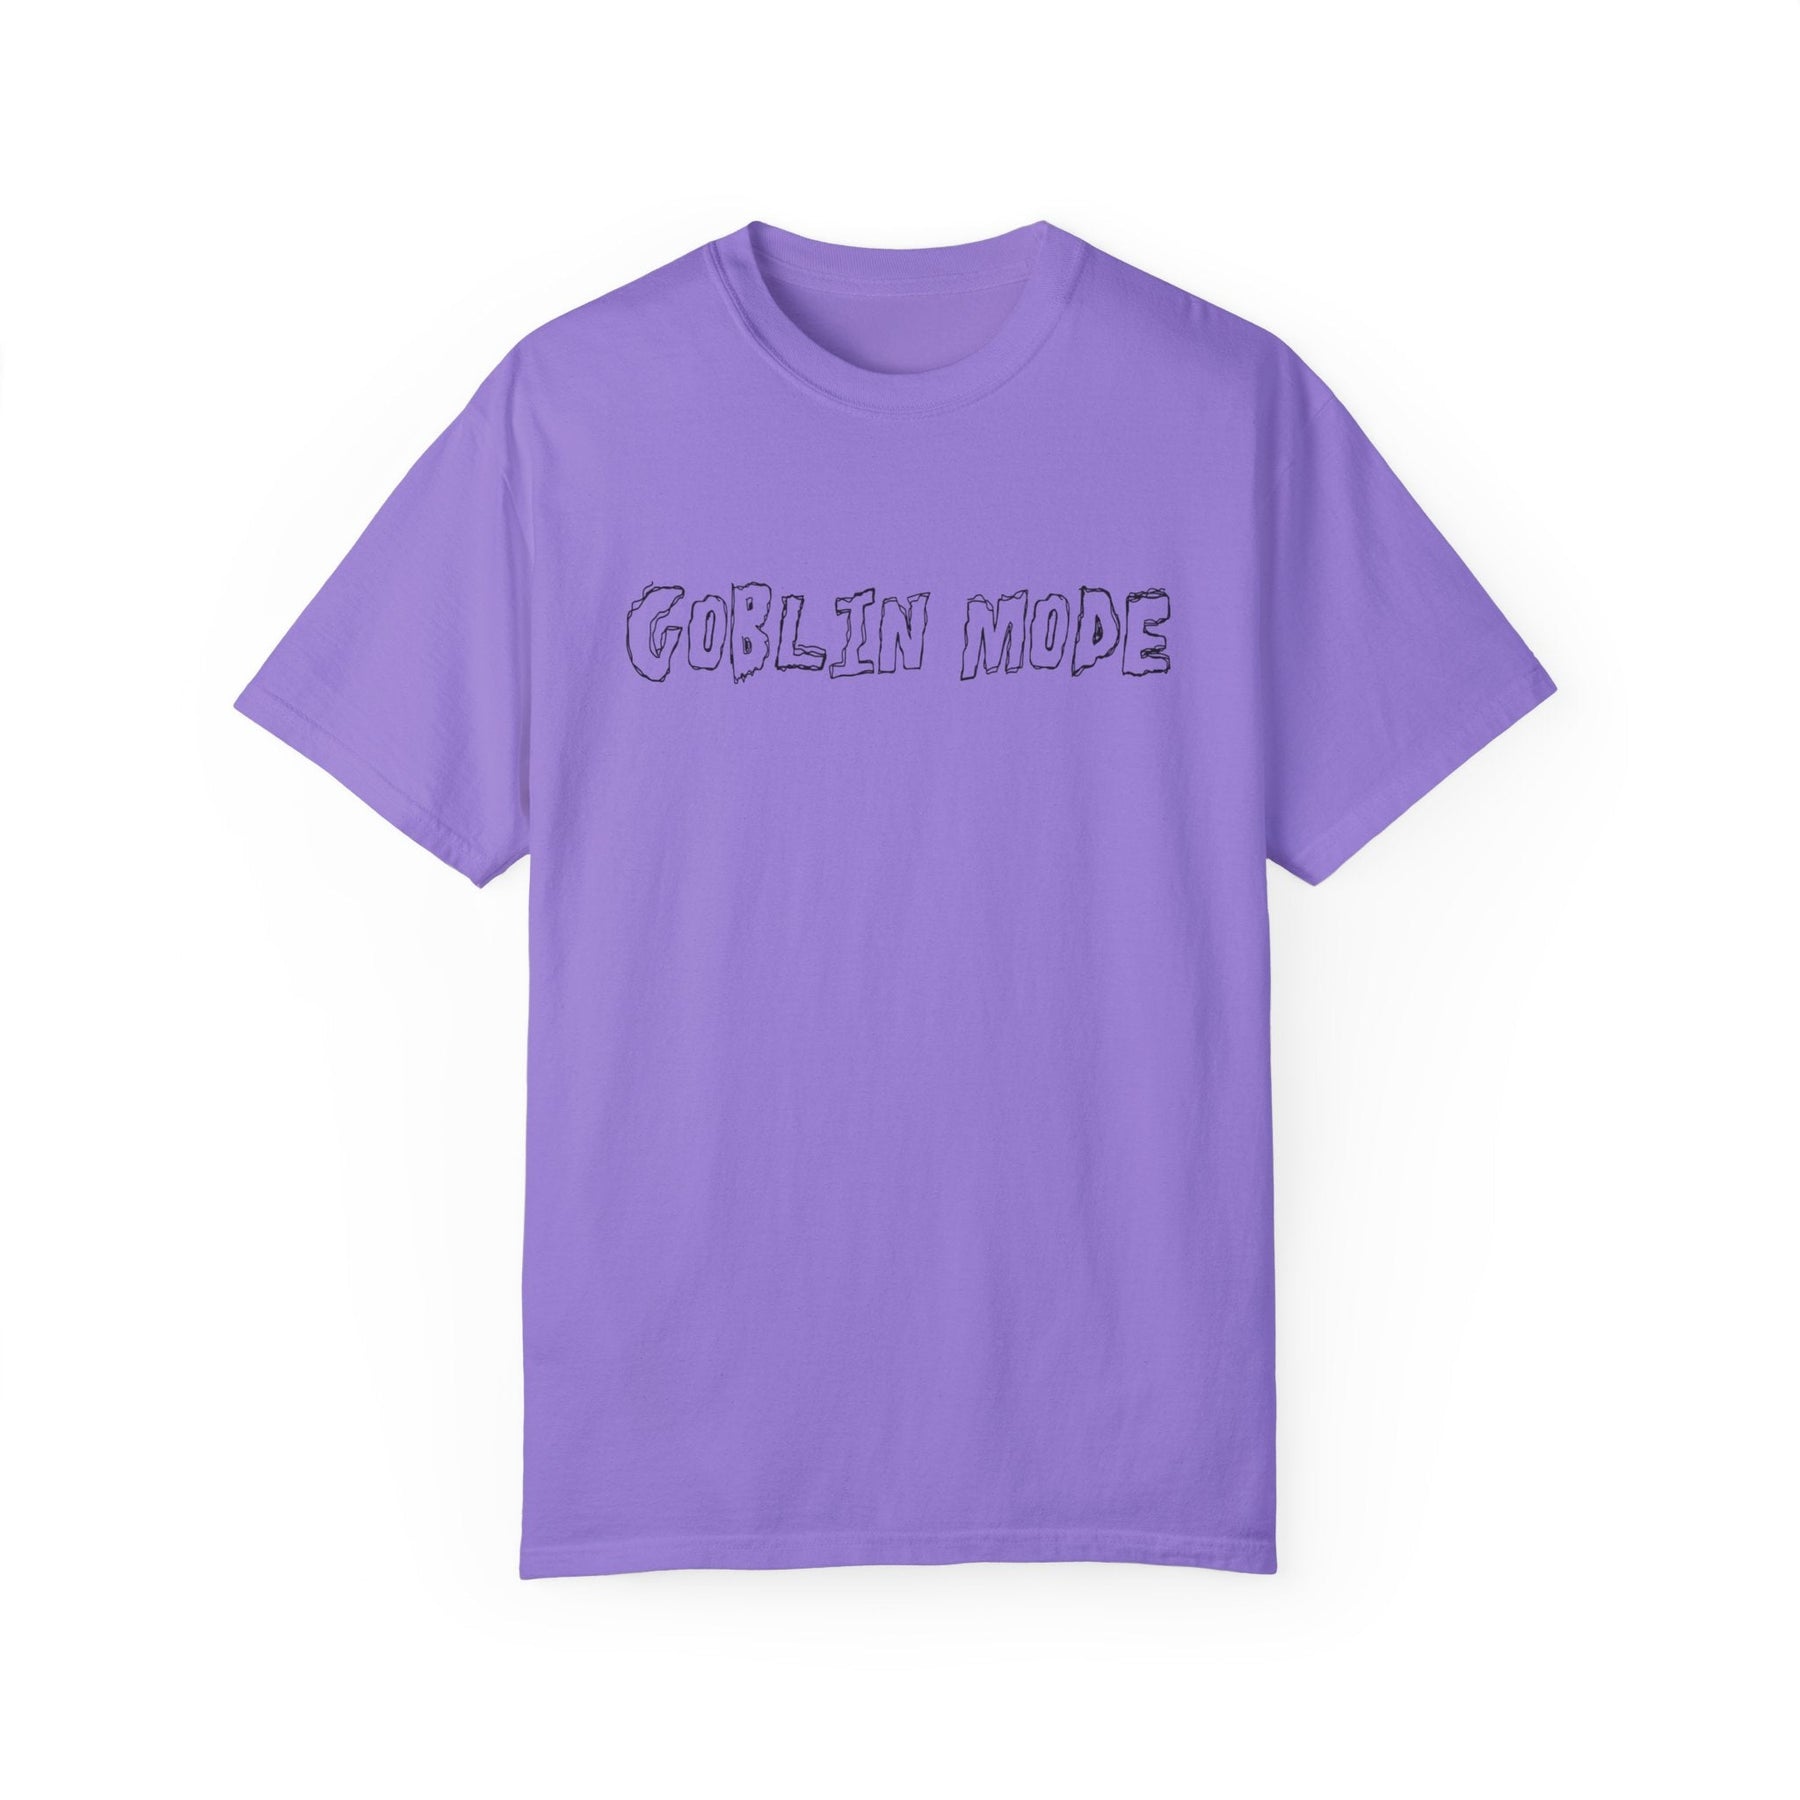 Goblin Mode Comfy Tee - Goth Cloth Co.T - Shirt31860941254088223048